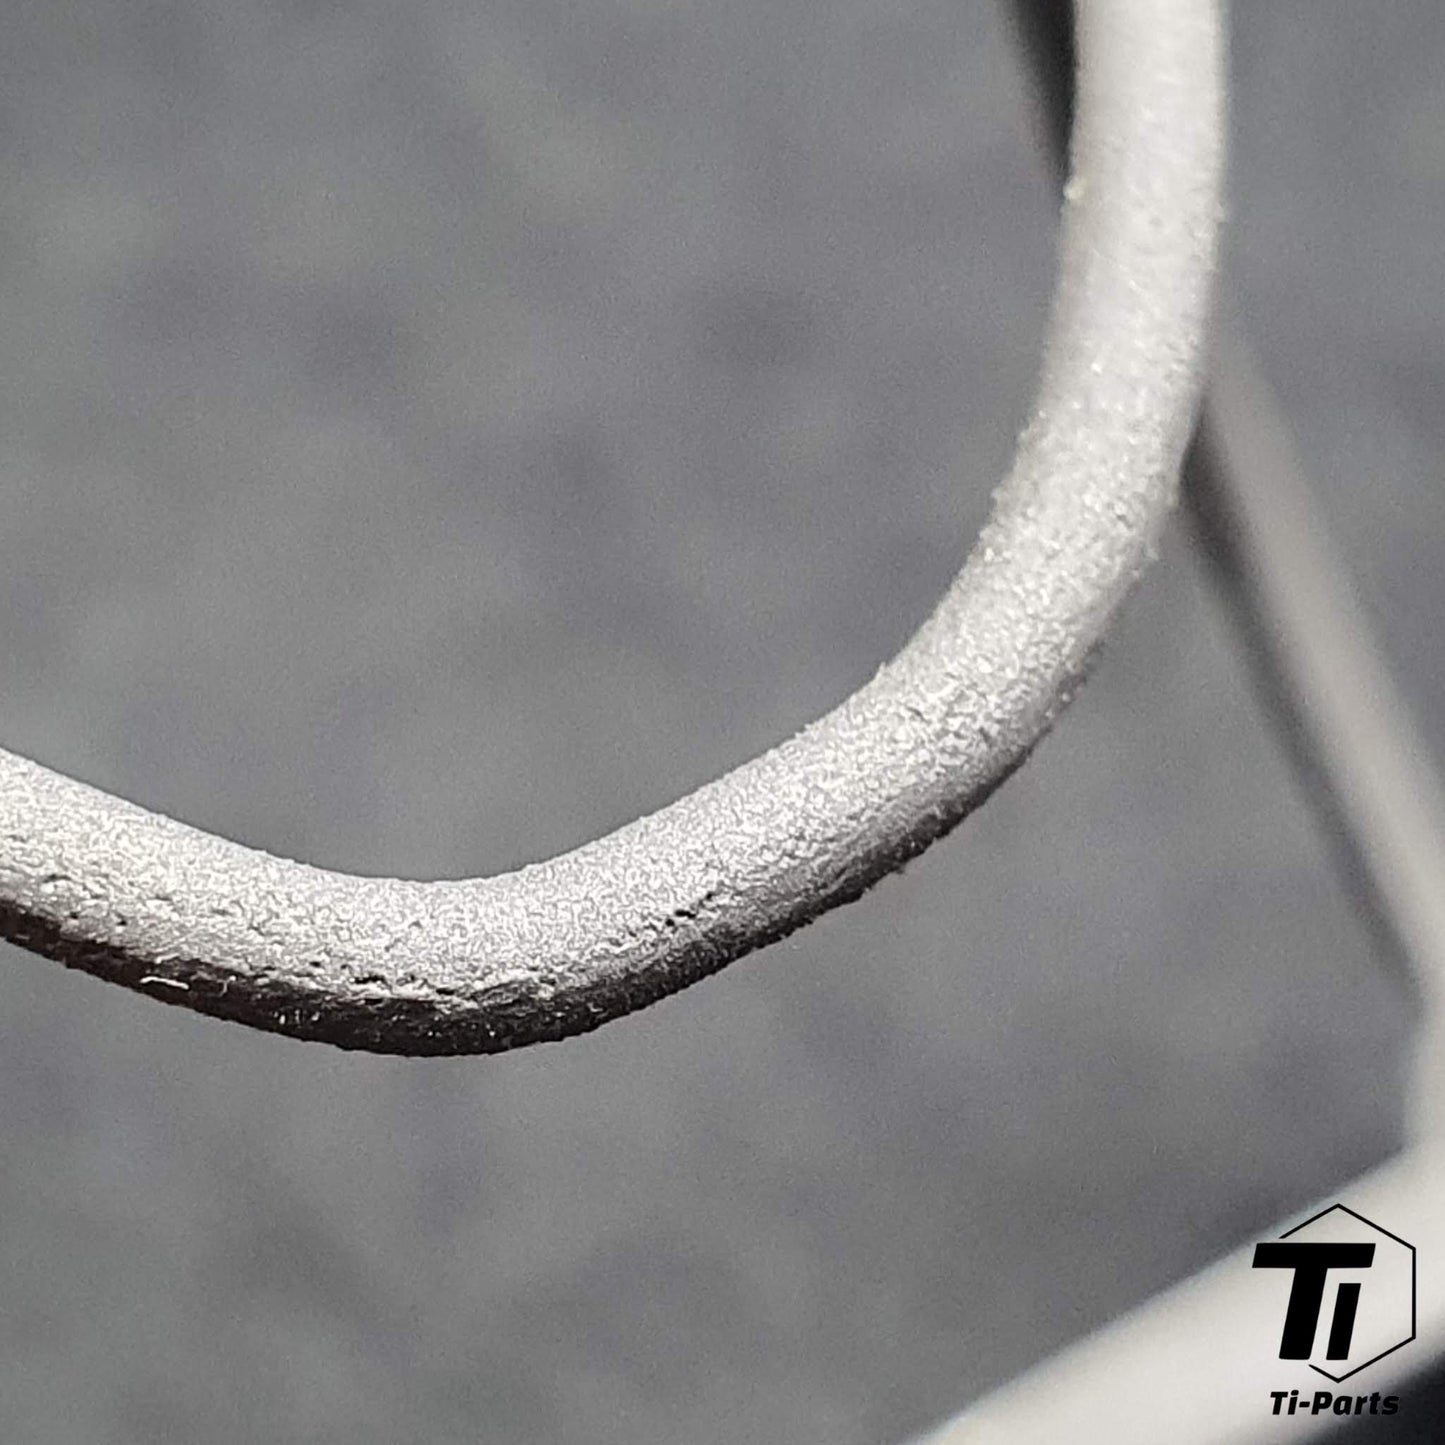 3D tisk Titanová ultralehká klec na láhev 12,2 gramu | Moots Can Nicolas Climbing Machine nezbytné EXS Cycling Roadbike Gravel MTB